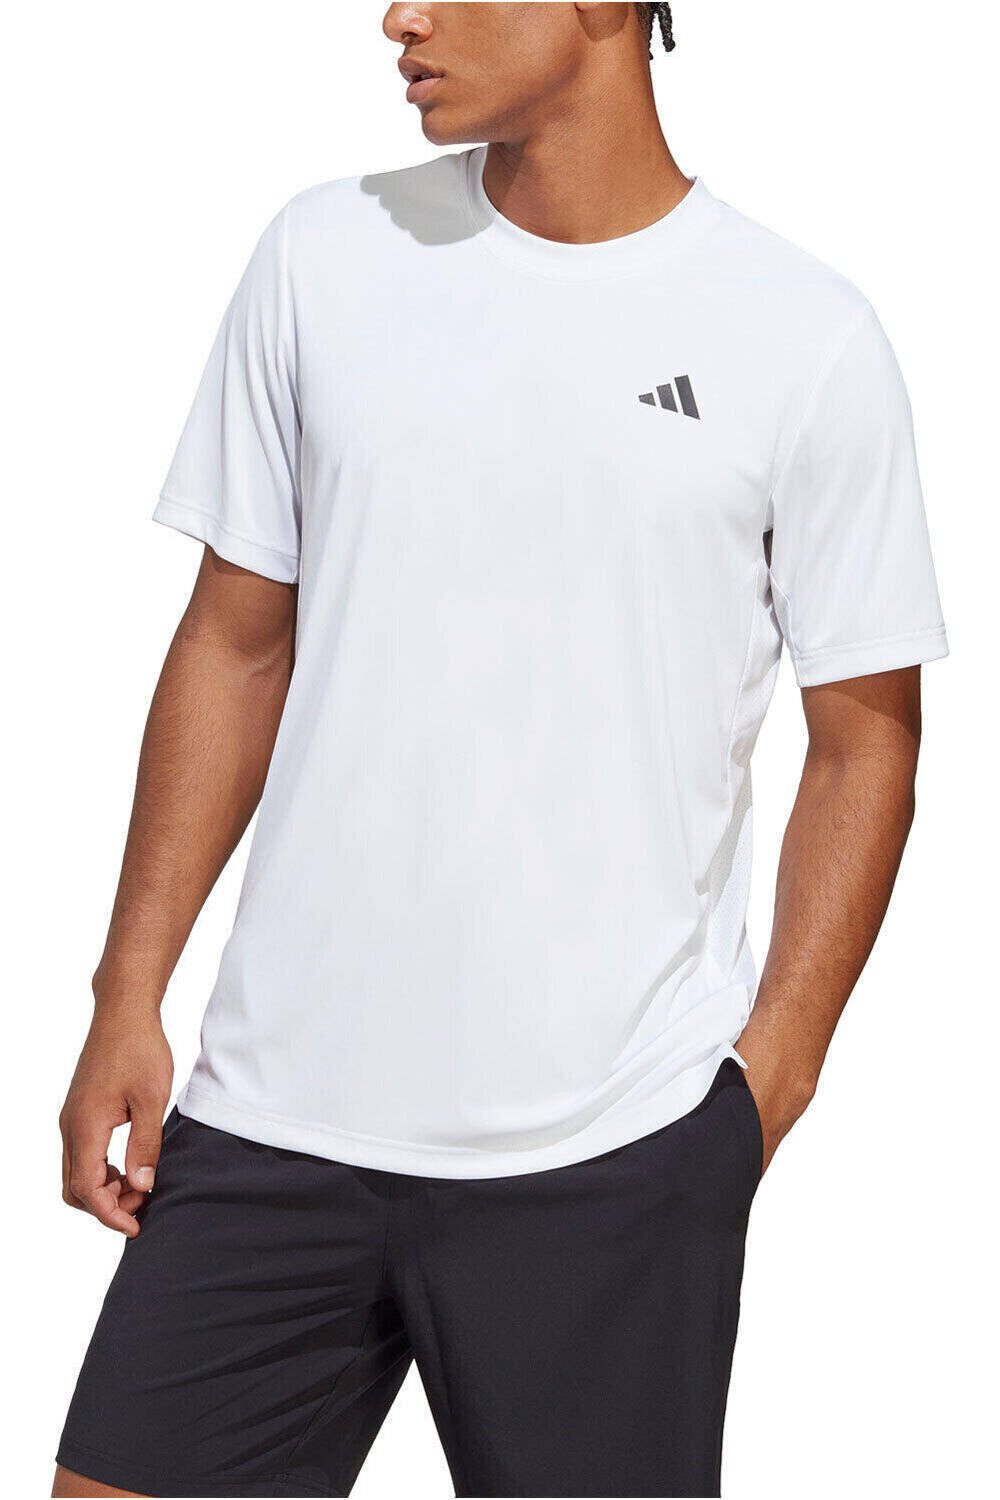 adidas camiseta tenis manga corta hombre Club Tennis vista frontal